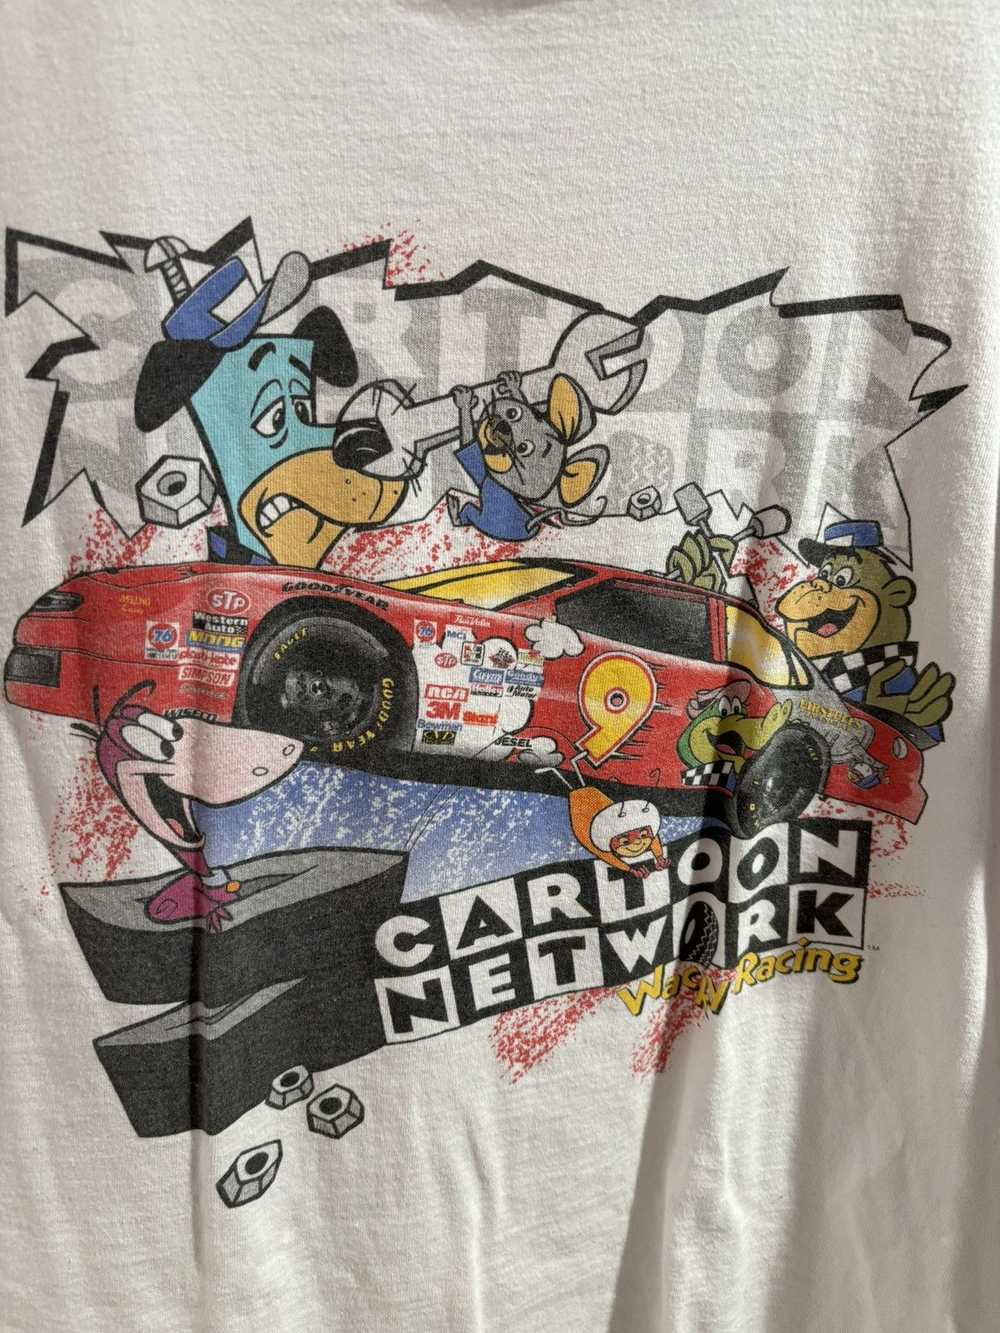 Vintage Cartoon Network wacky racing shirt - image 2